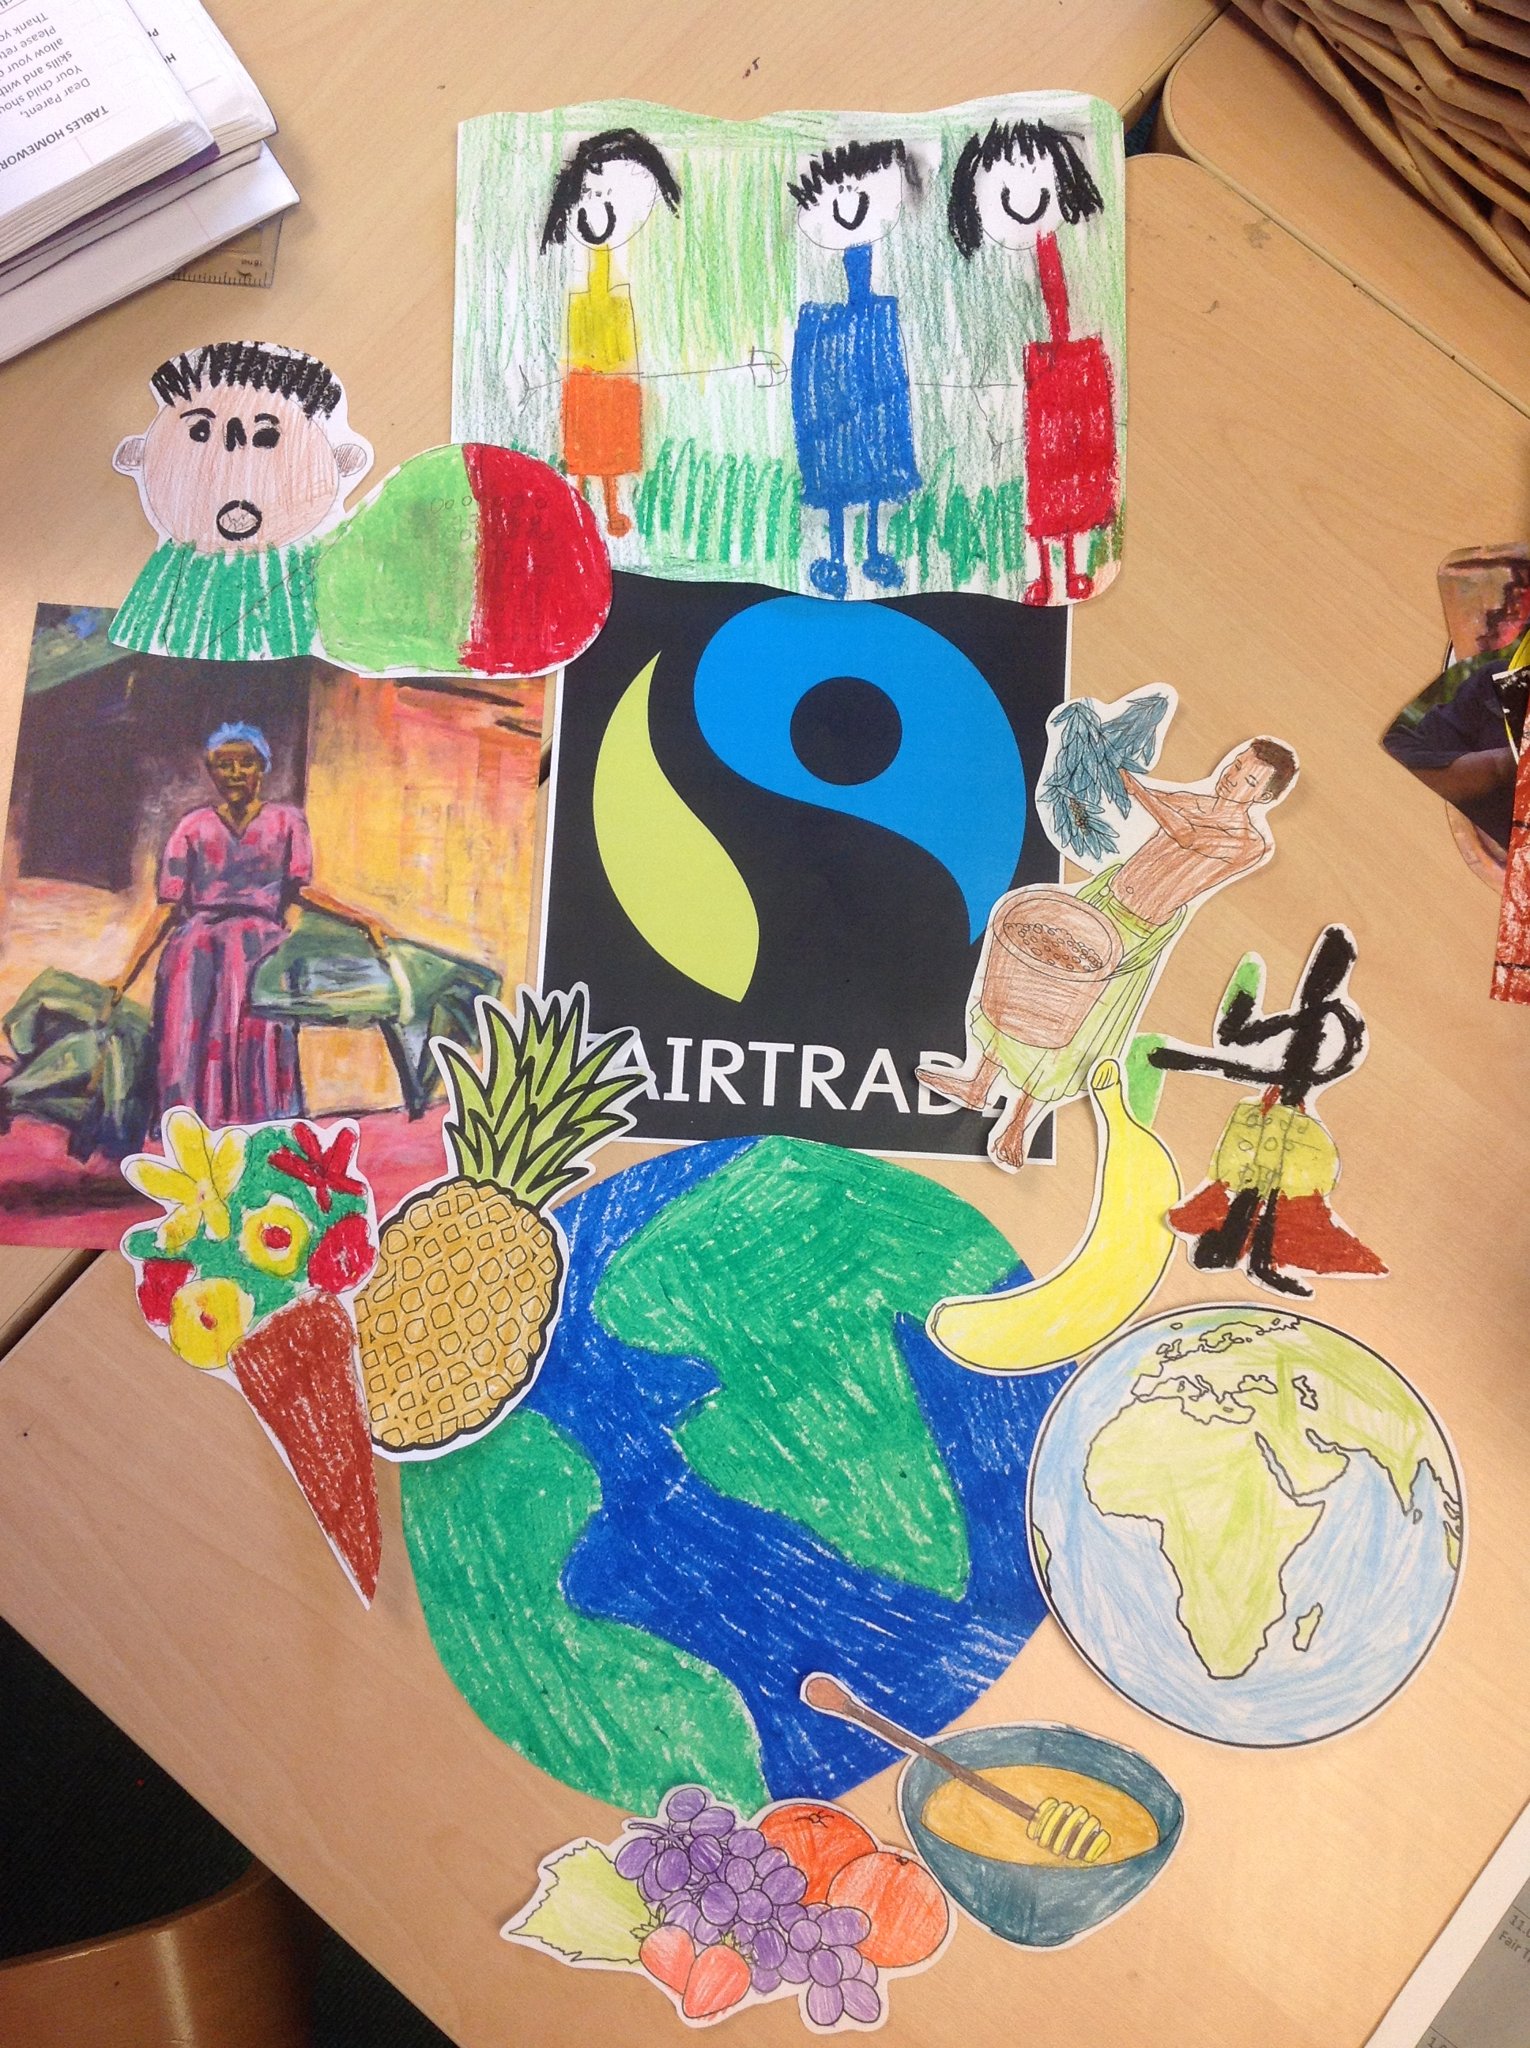 Fairtrade! | Boarshaw Primary School1530 x 2048